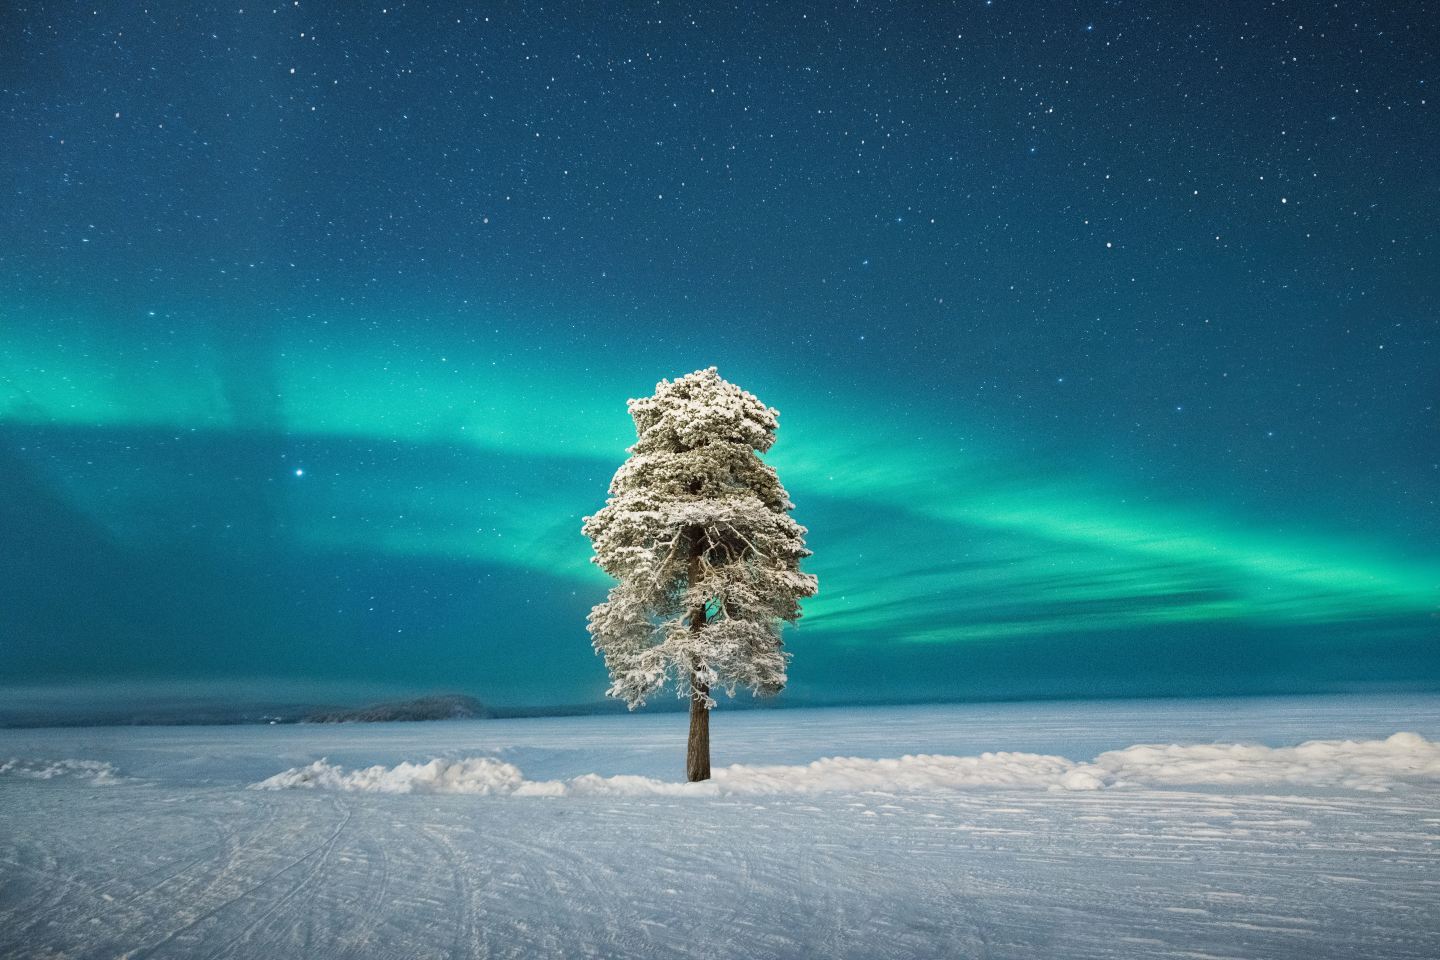 "Одинокое дерево под скандинавским сиянием". Фото: Tom Archer